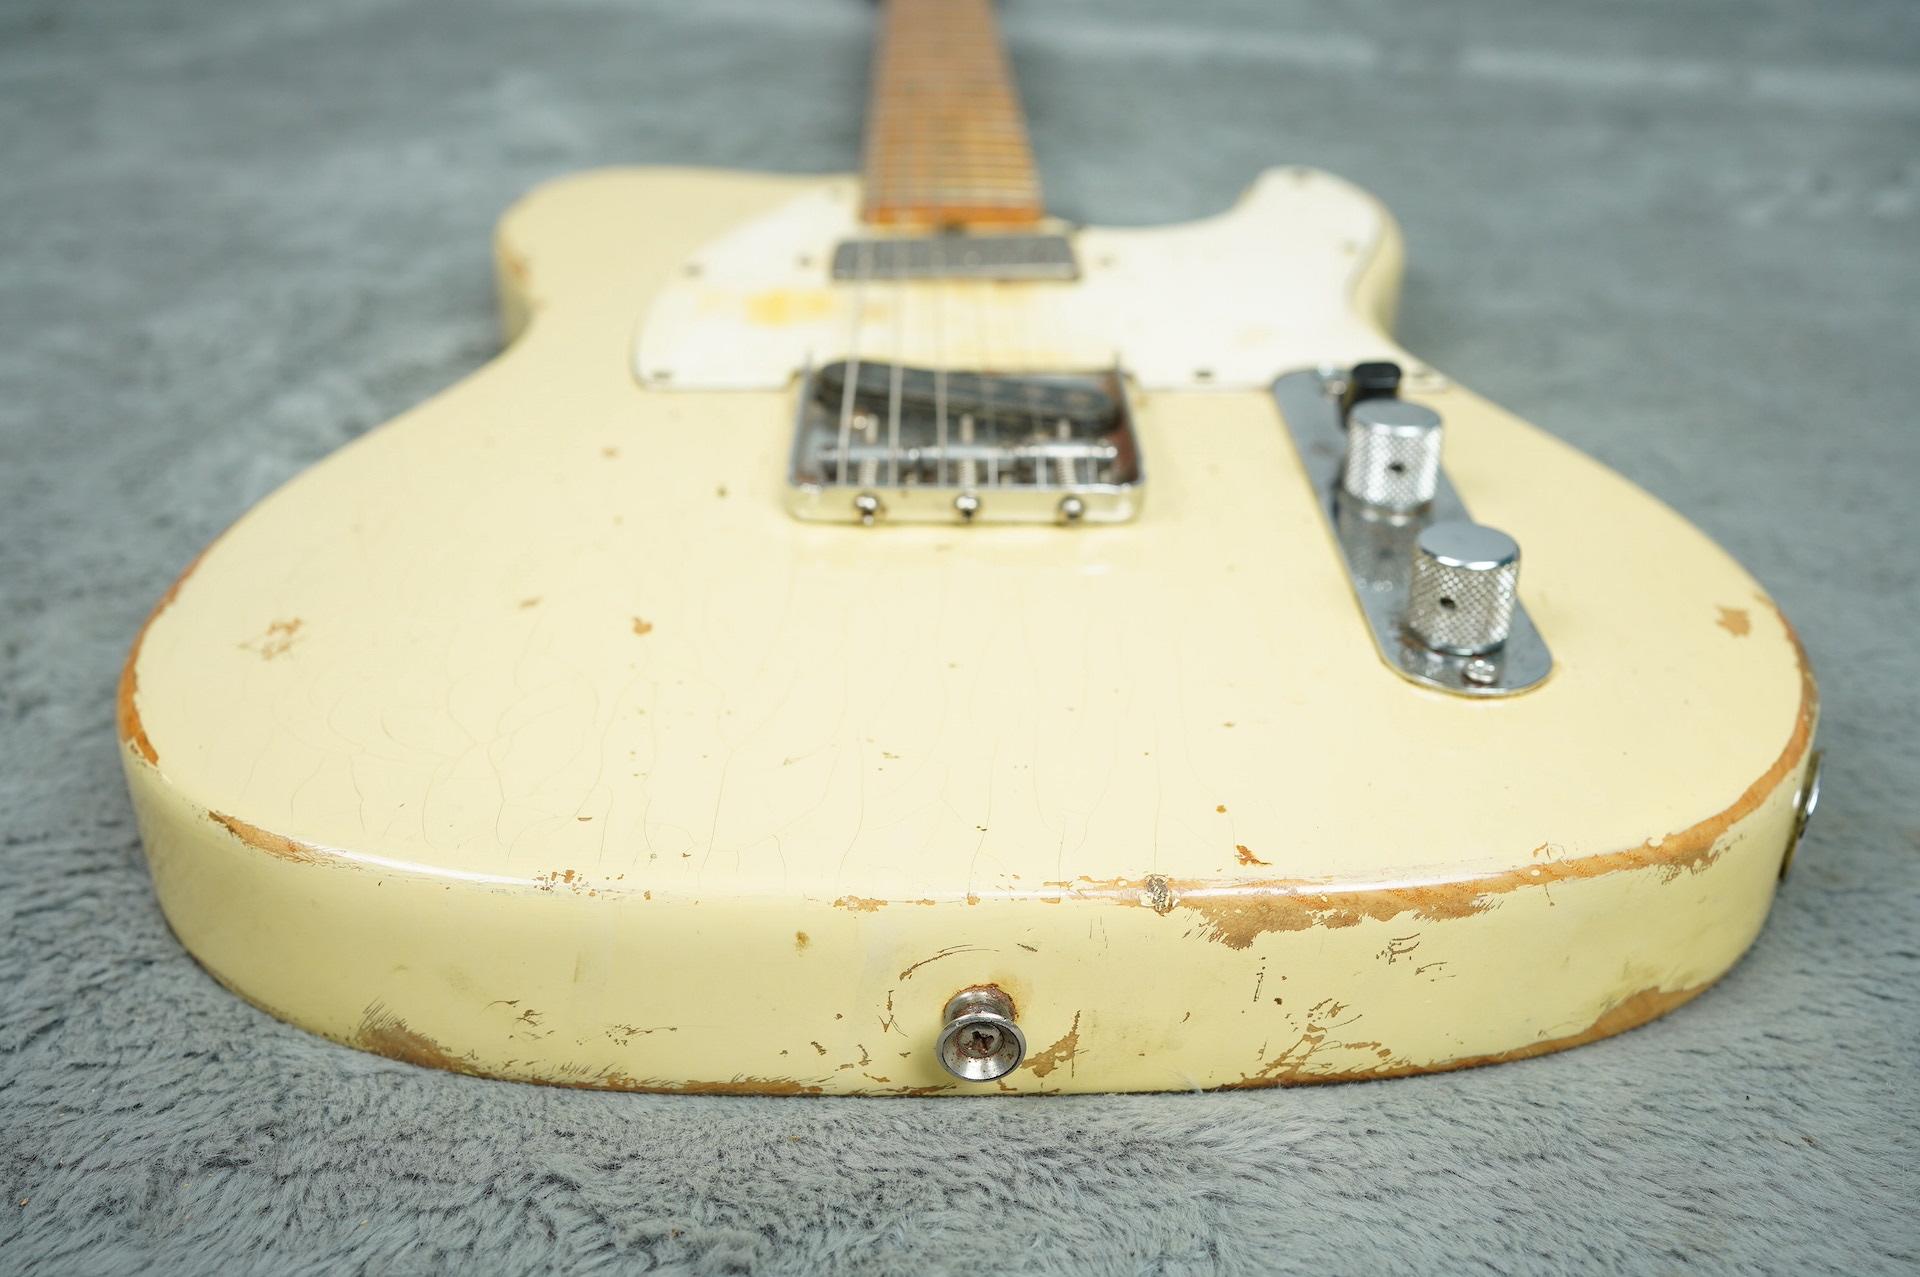 1974 Fender Telecaster Blonde